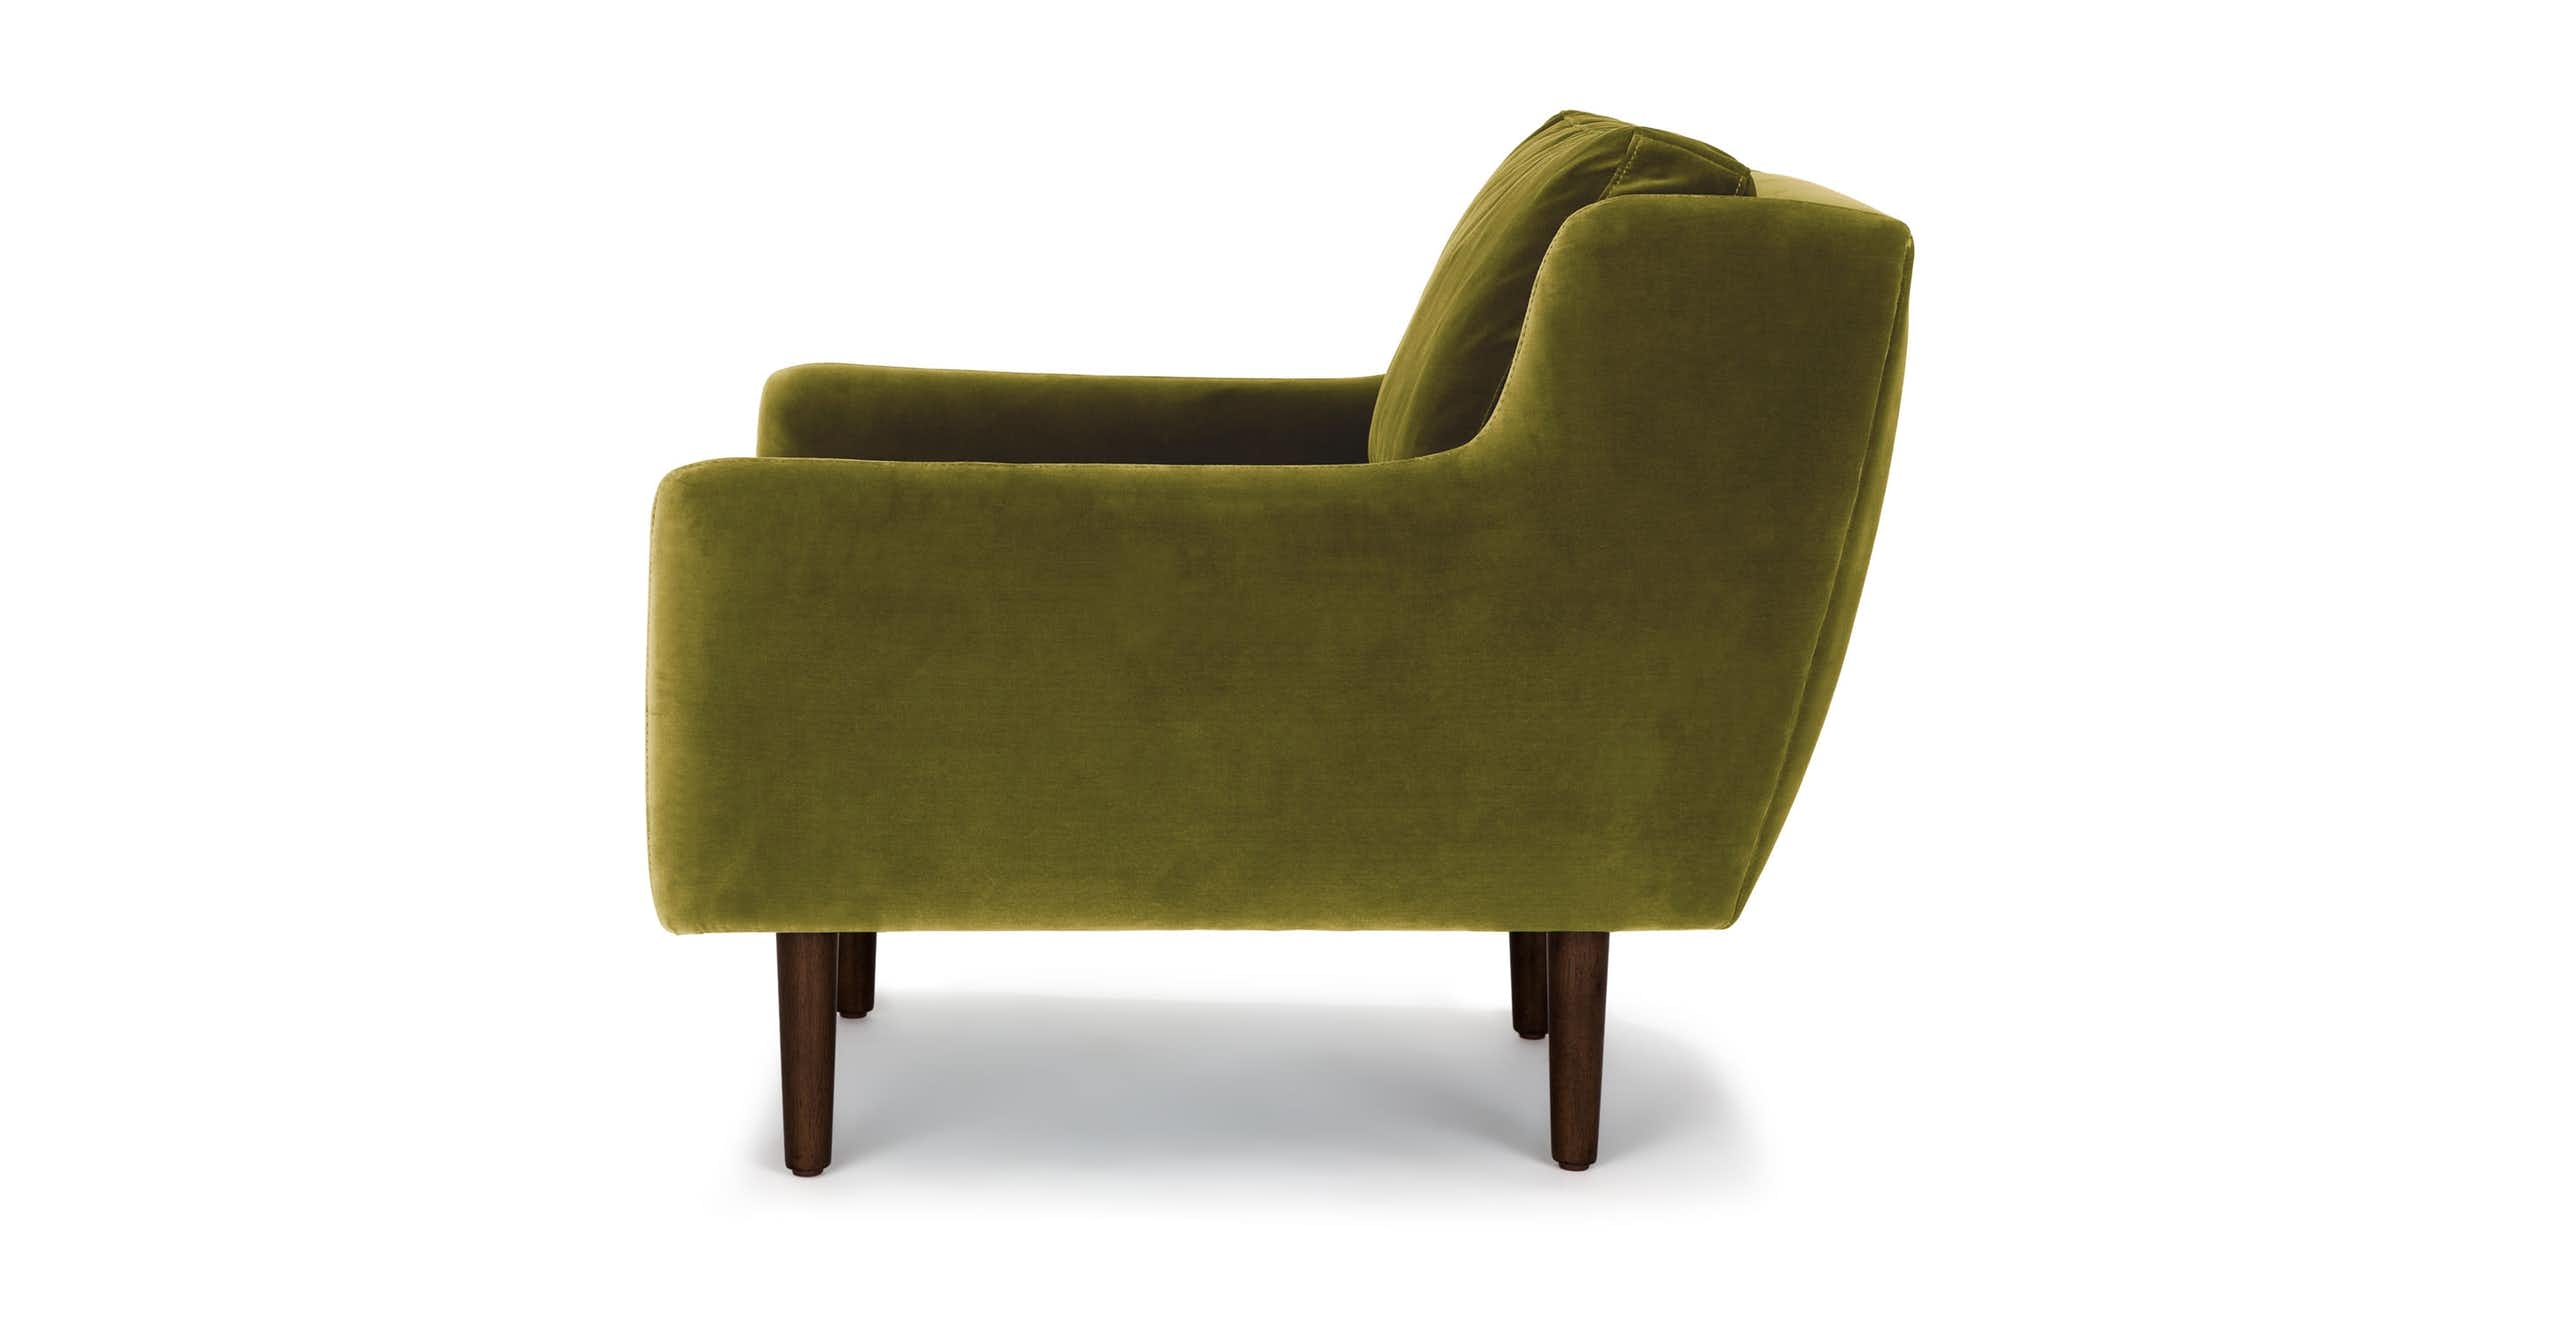 Matrix Olive Green Chair - Image 2